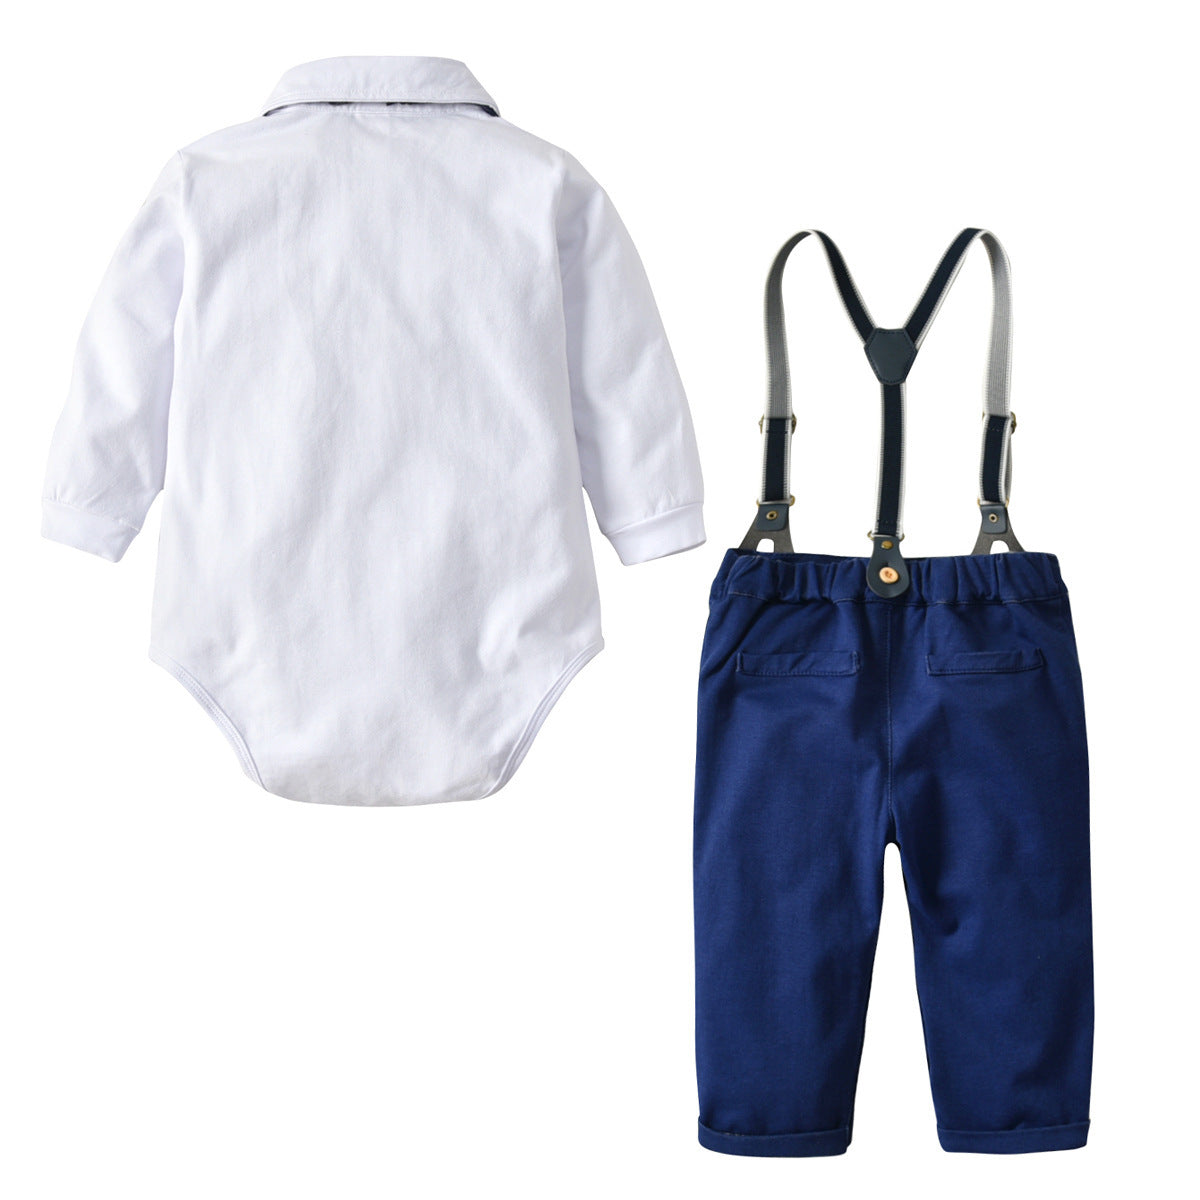 Baby Boys Summer Half Sleeves Gentleman Bow 2pcs Suits